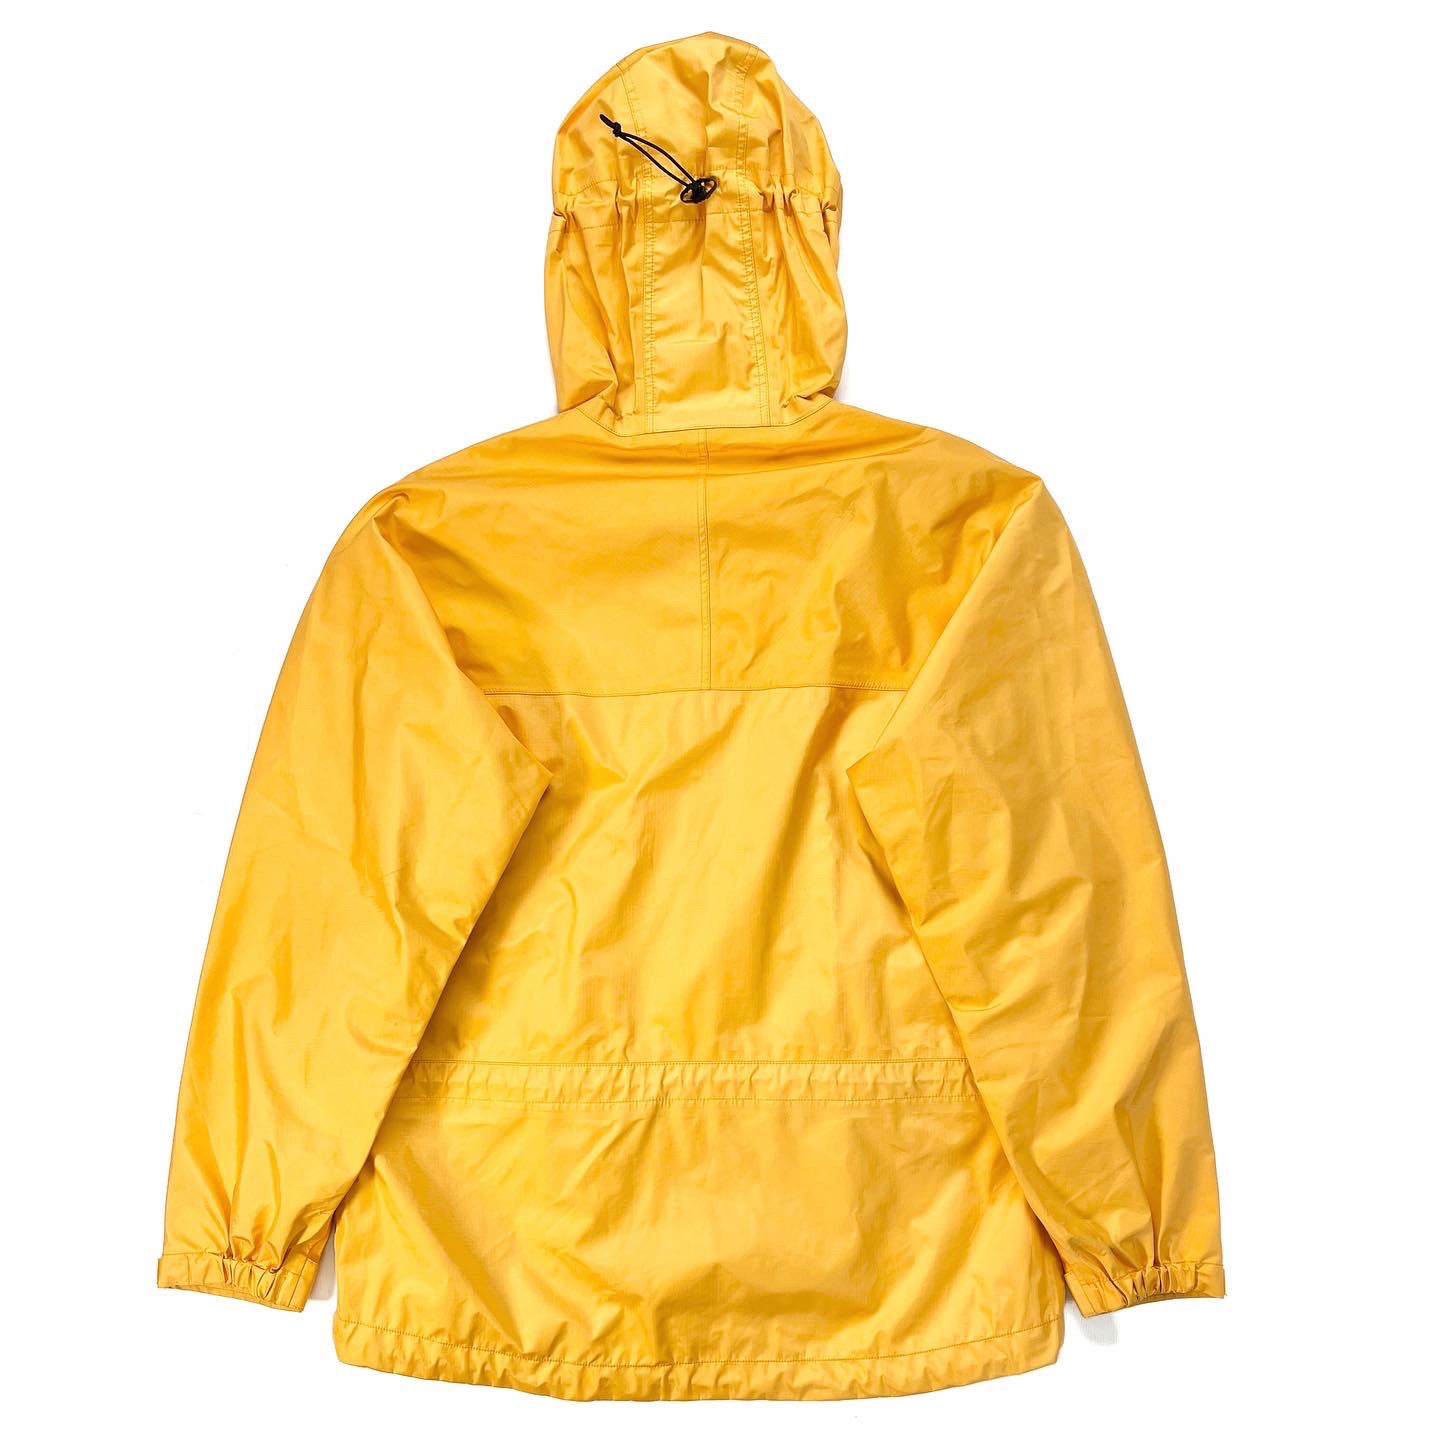 1998 Patagonia Super Pluma Waterproof Jacket, Butternut (L)